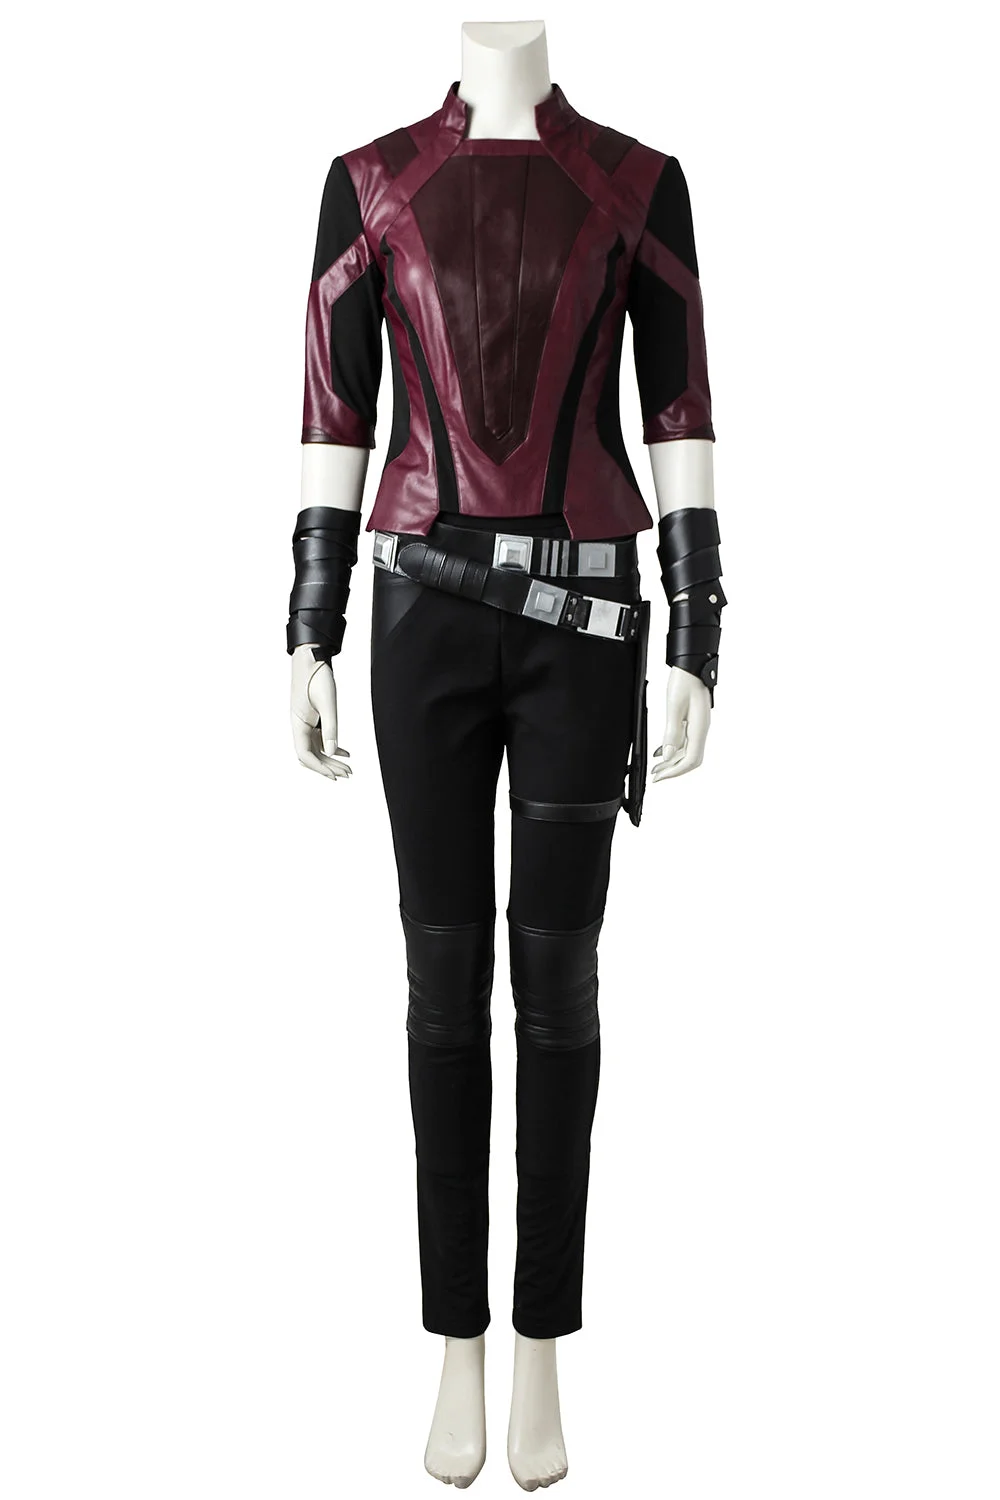 Marvel Guardians of the Galaxy Vol. 2 Gamora Cosplay Costume